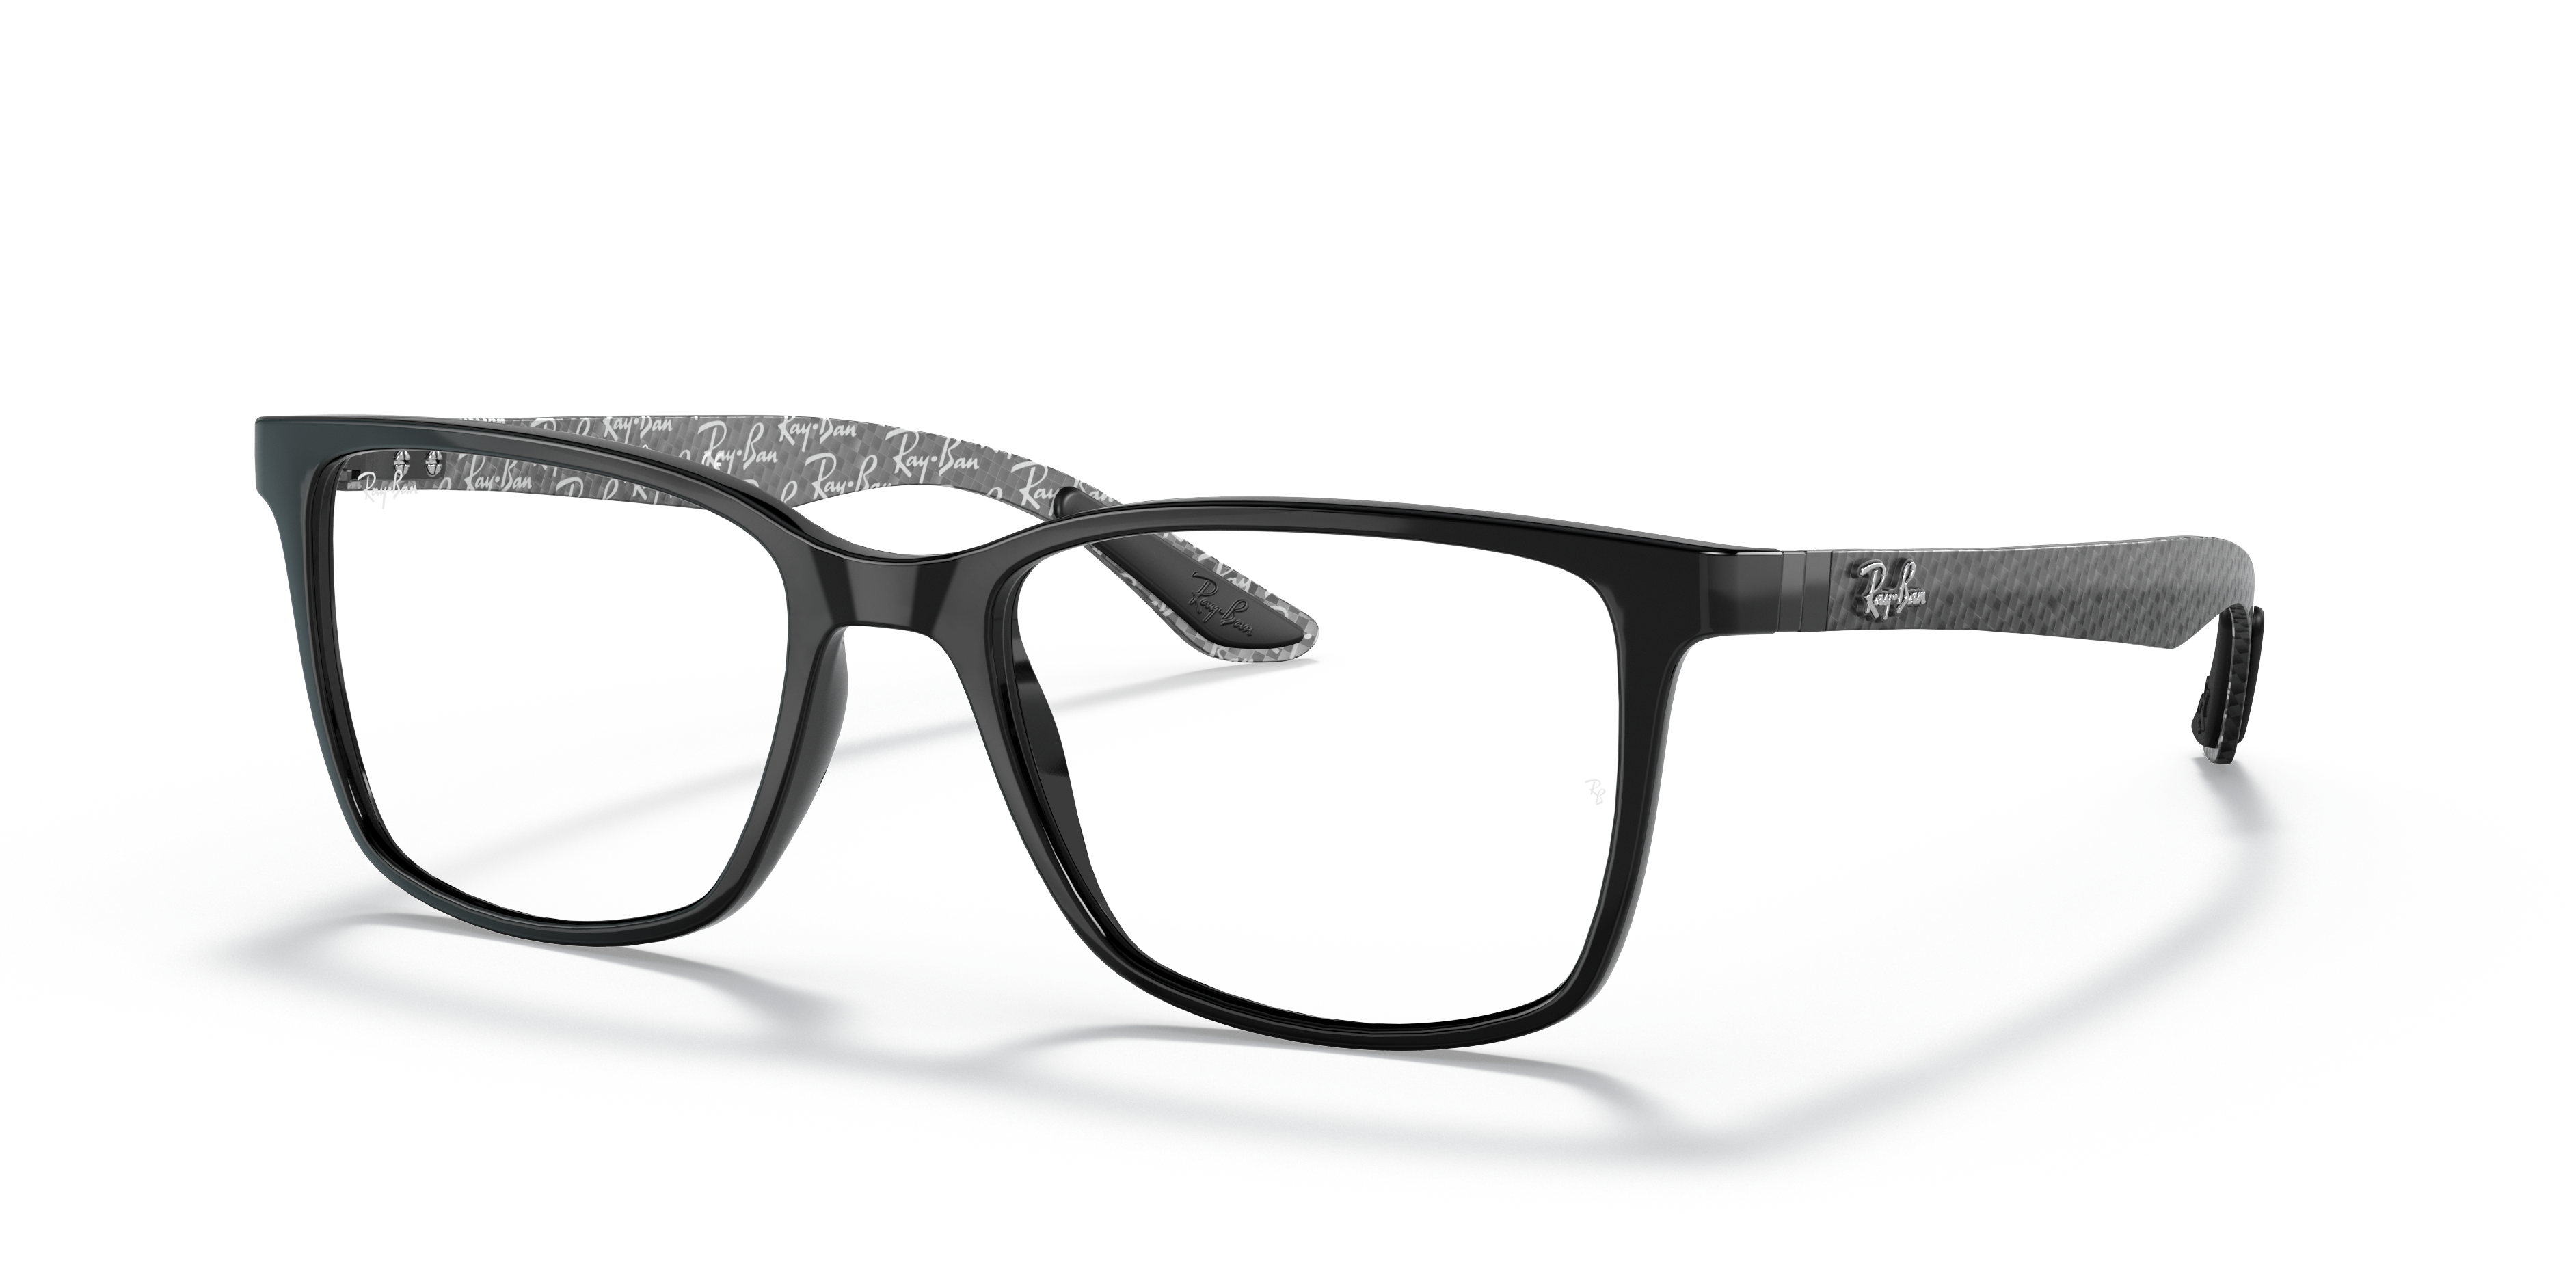 Rb8905 Eyeglasses with Black Frame | Ray-Ban®